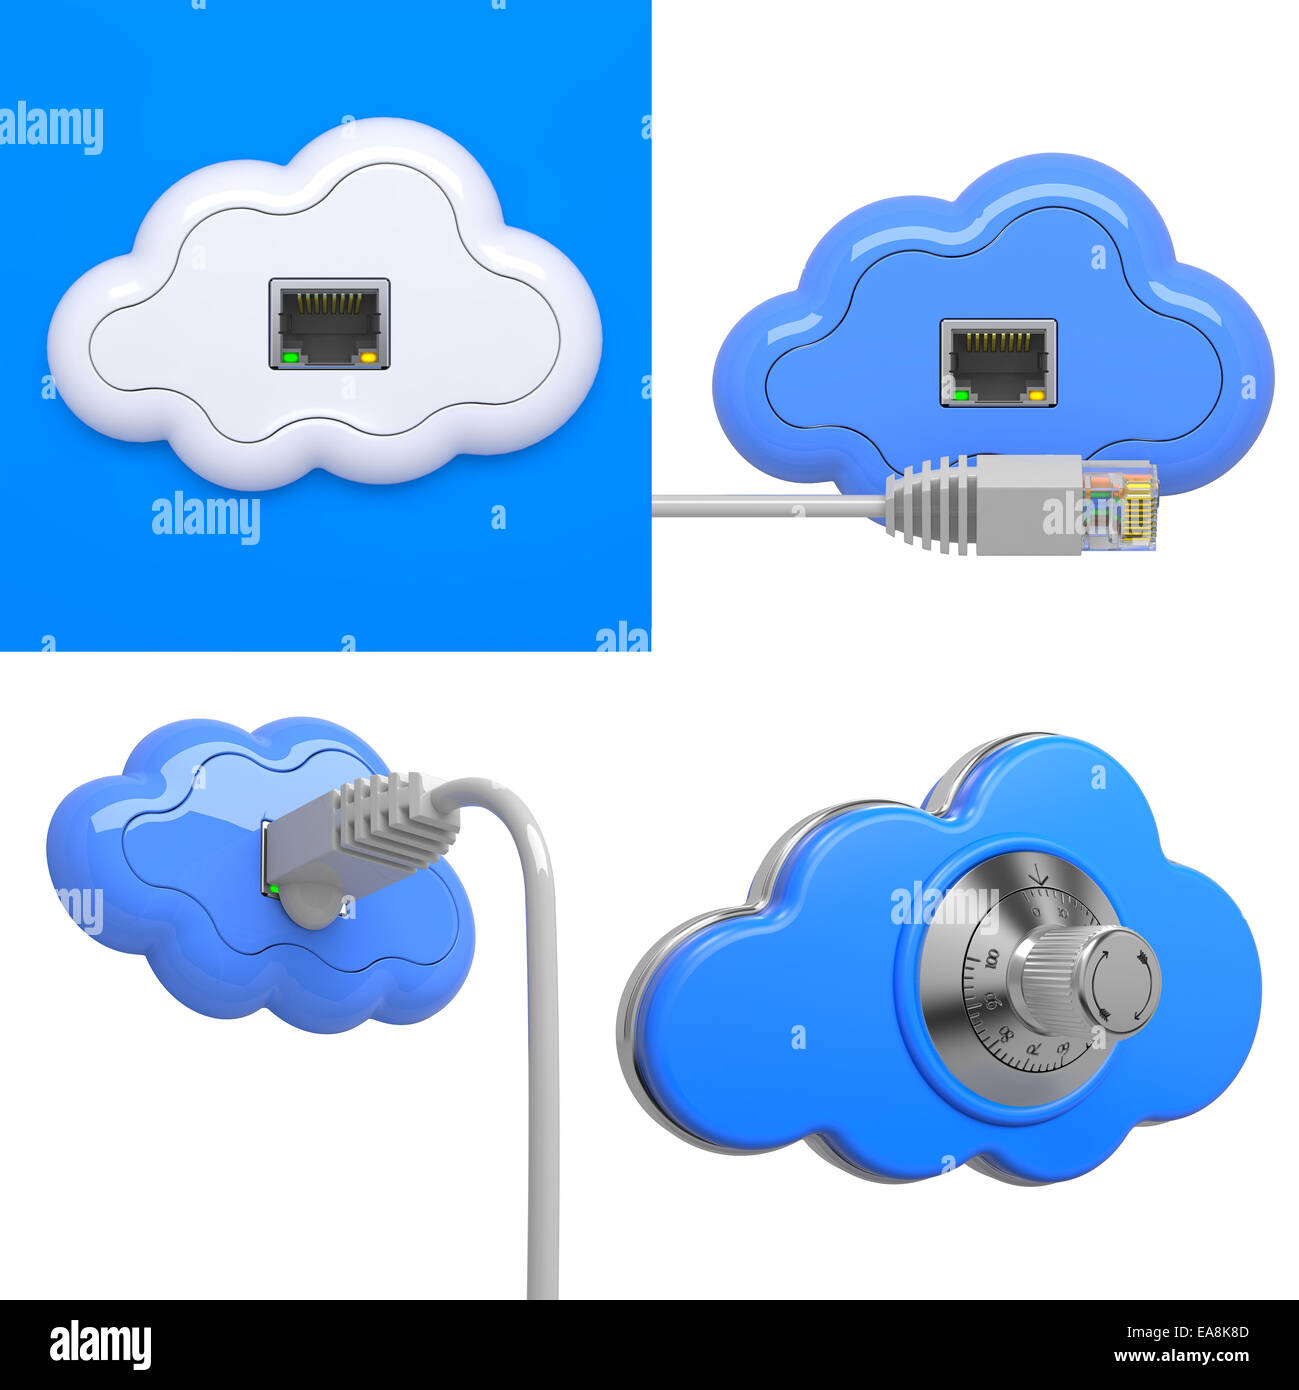 Cloud Computing Concepts - Set of 3D Illustrations. Stock Photo